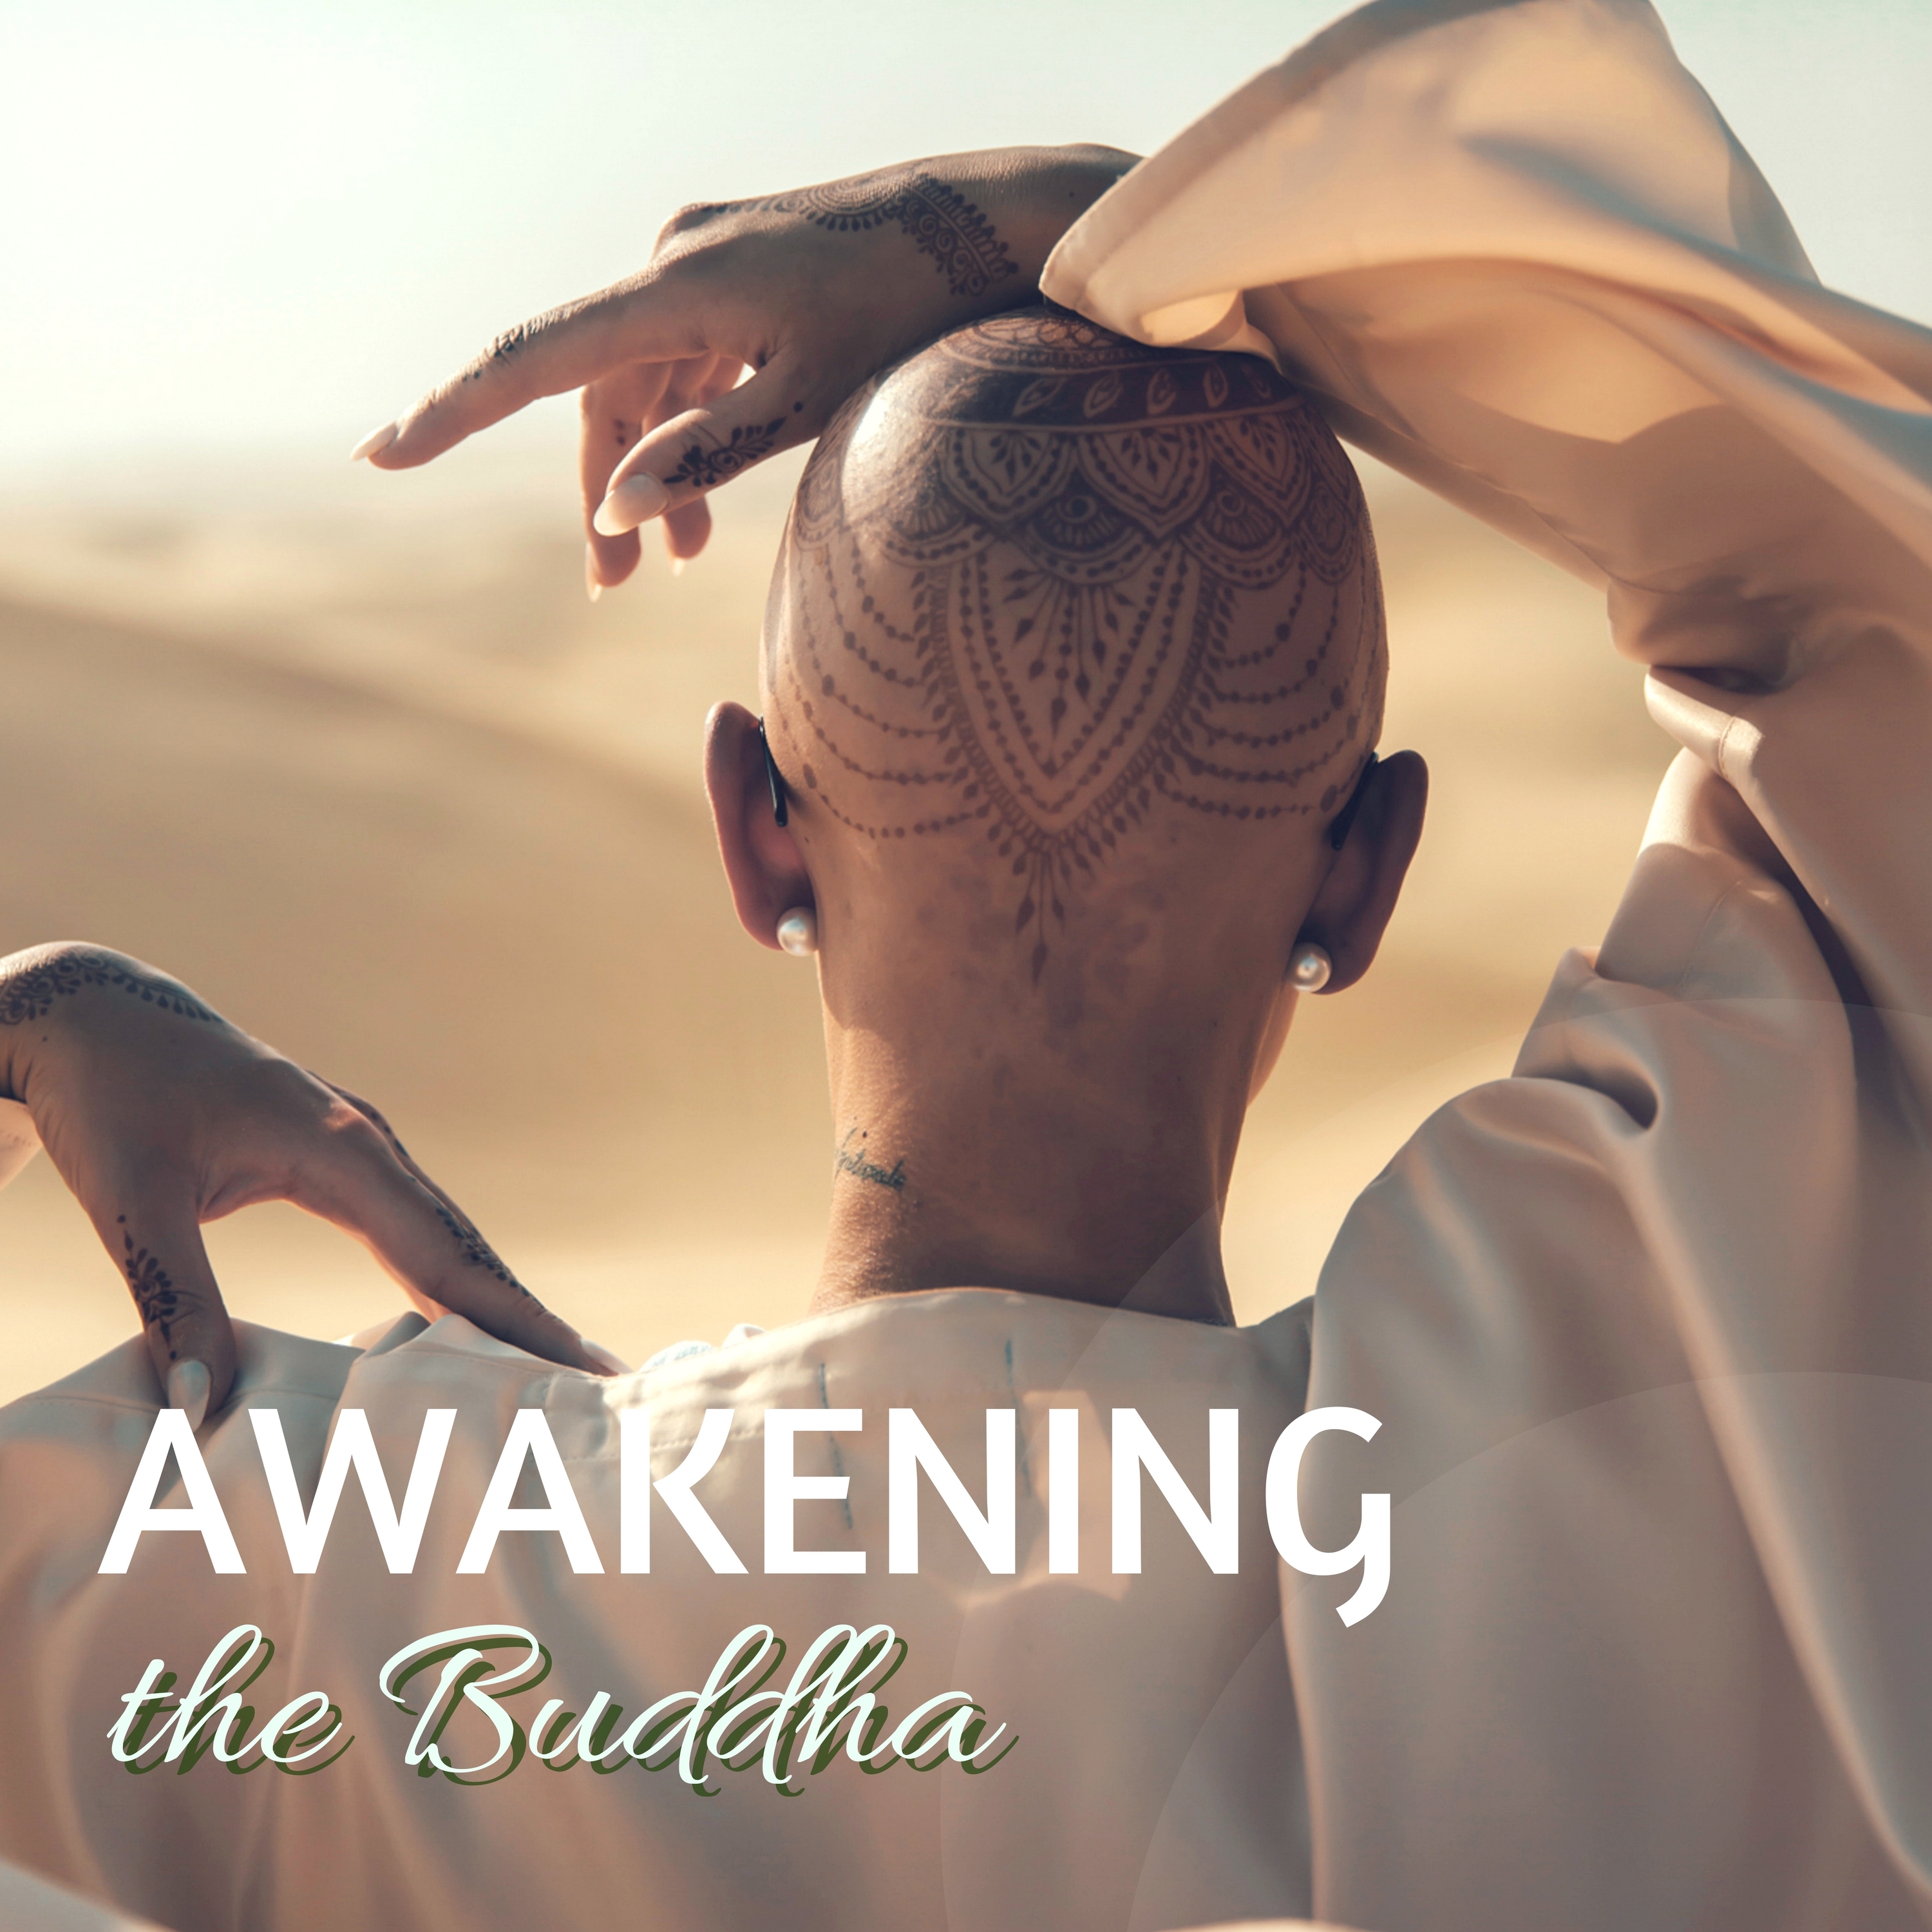 Awakening the Buddha - Best Empowering Lounge Music Playlist for Yoga and Sun Salutation